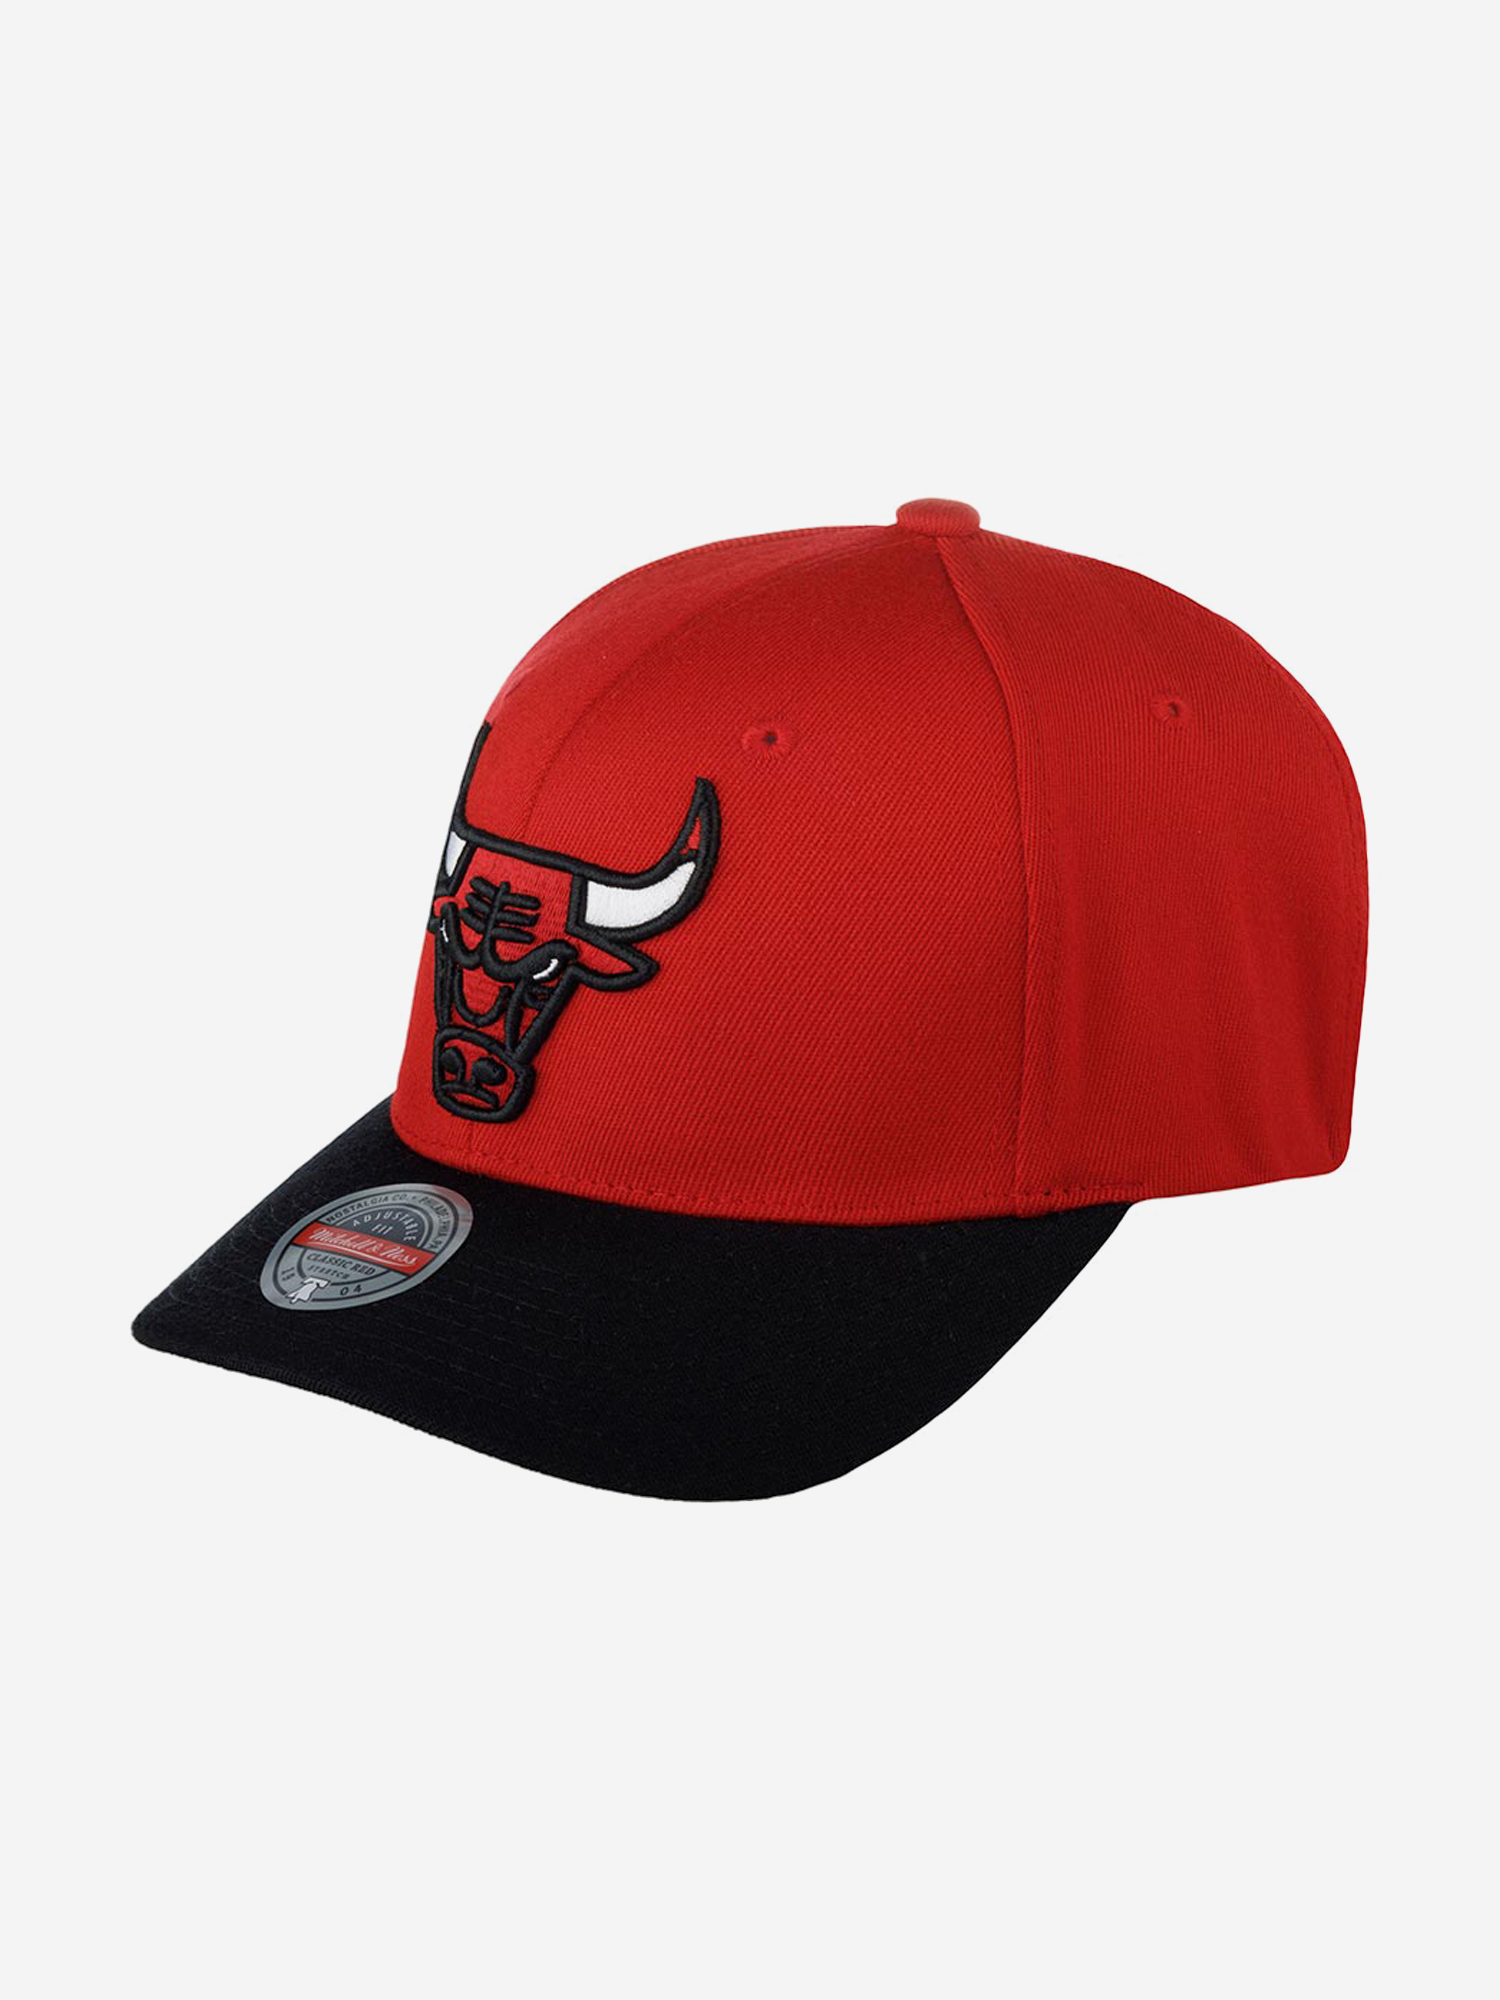 Бейсболка MITCHELL NESS HHSS3265-CBUYYPPPRDBK Chicago Bulls NBA (красный), Красный бейсболка mitchell ness hhss3273 cbuyypppgyht сhicago bulls nba серый серый